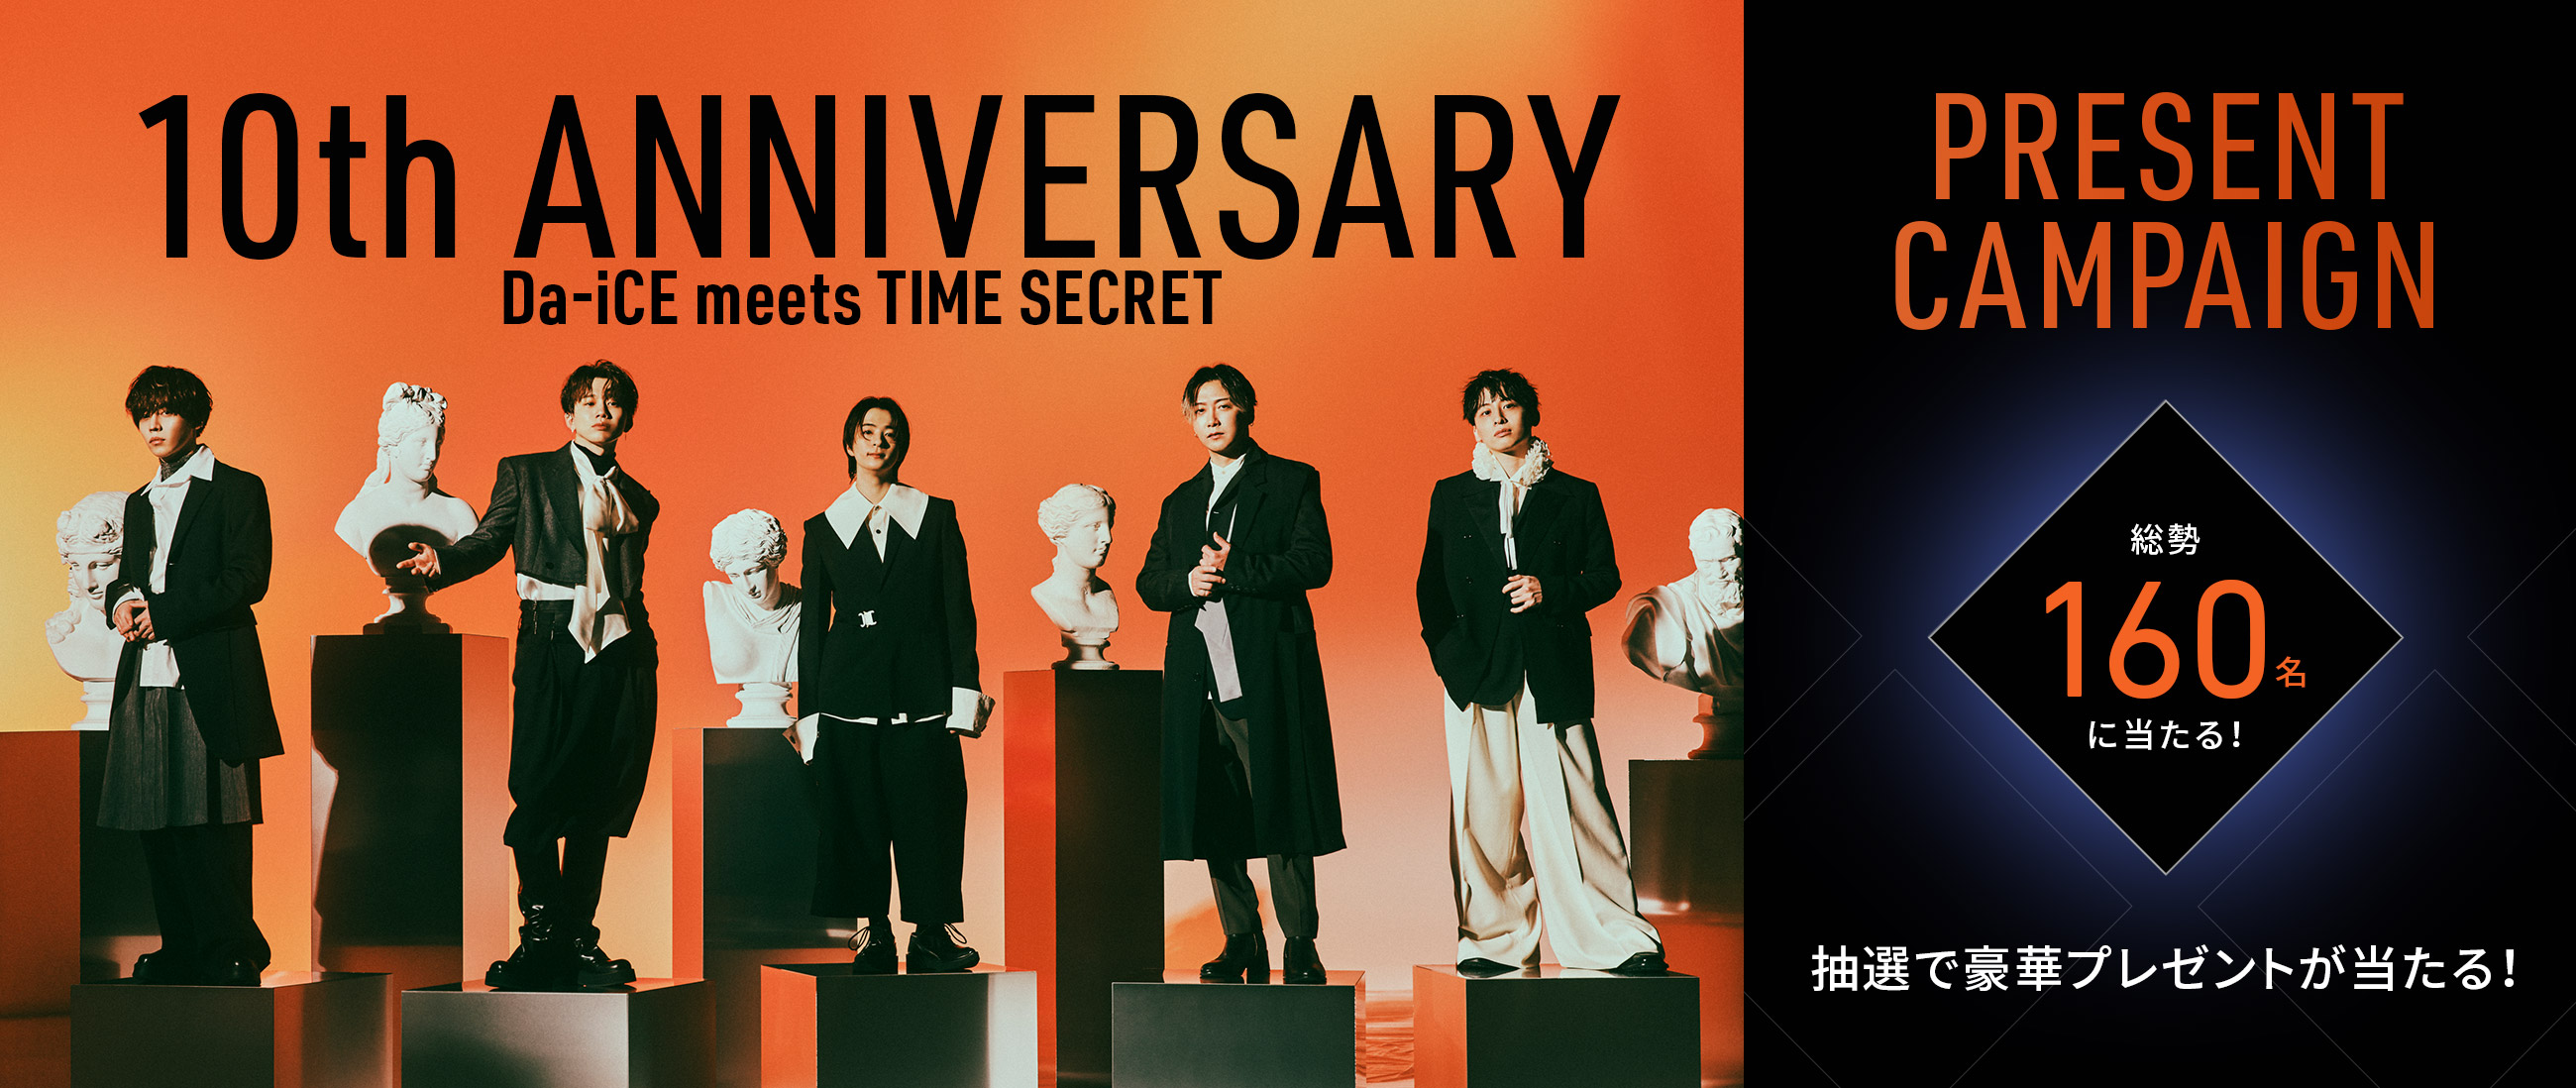 TIME SECRET 10th Anniversary Da-iCE meets TIME SECRET